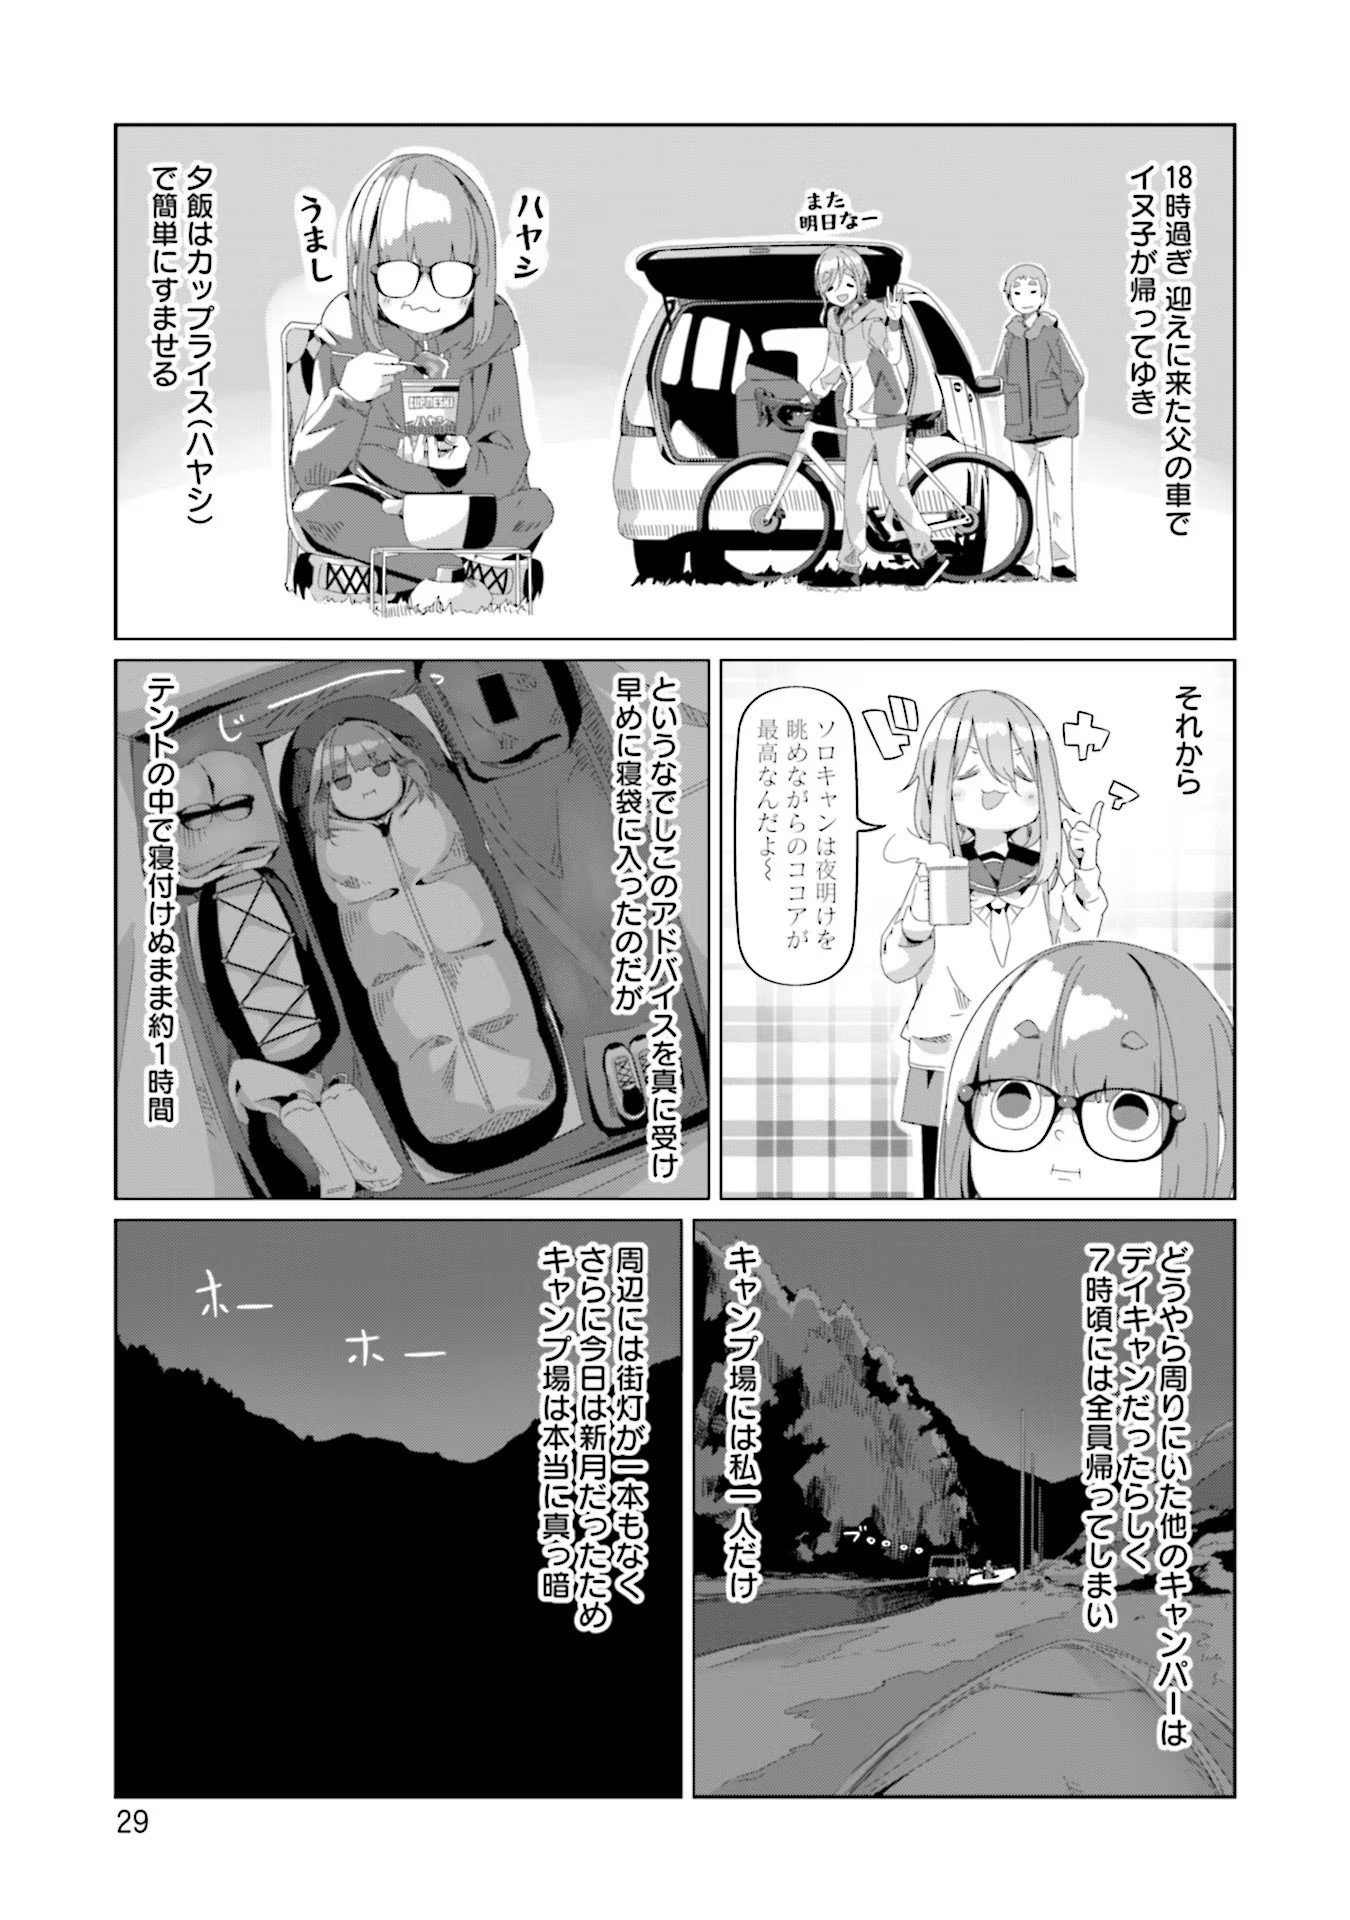 Yuru Camp - Chapter 77 - Page 1